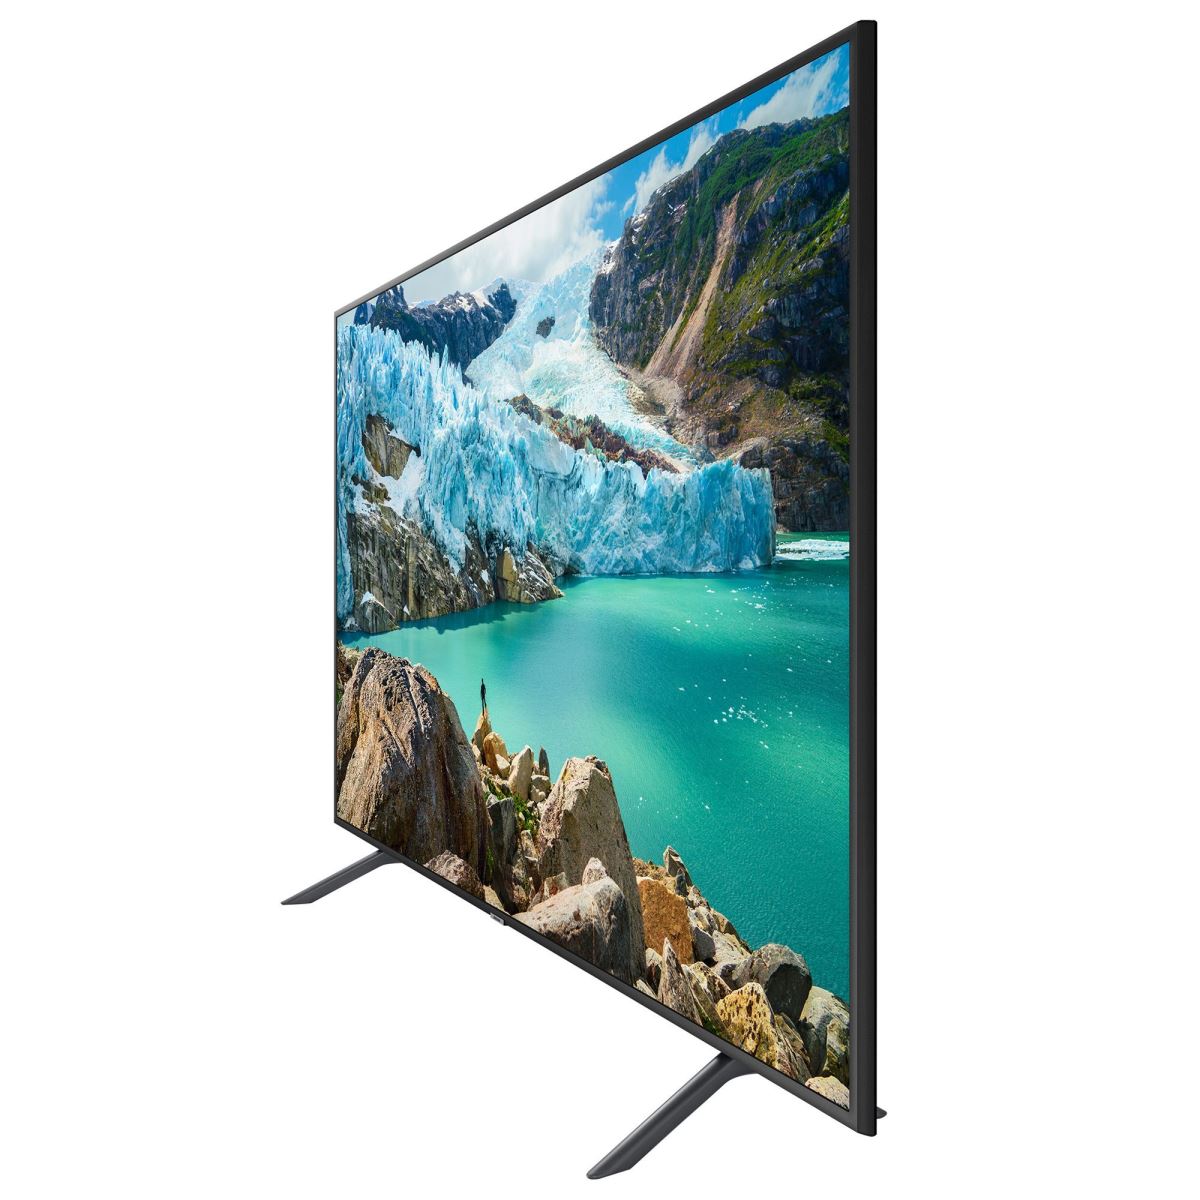 Repel professional Expression Televizor LED Samsung 43RU7102 - Pret avantajos - Ideall.ro